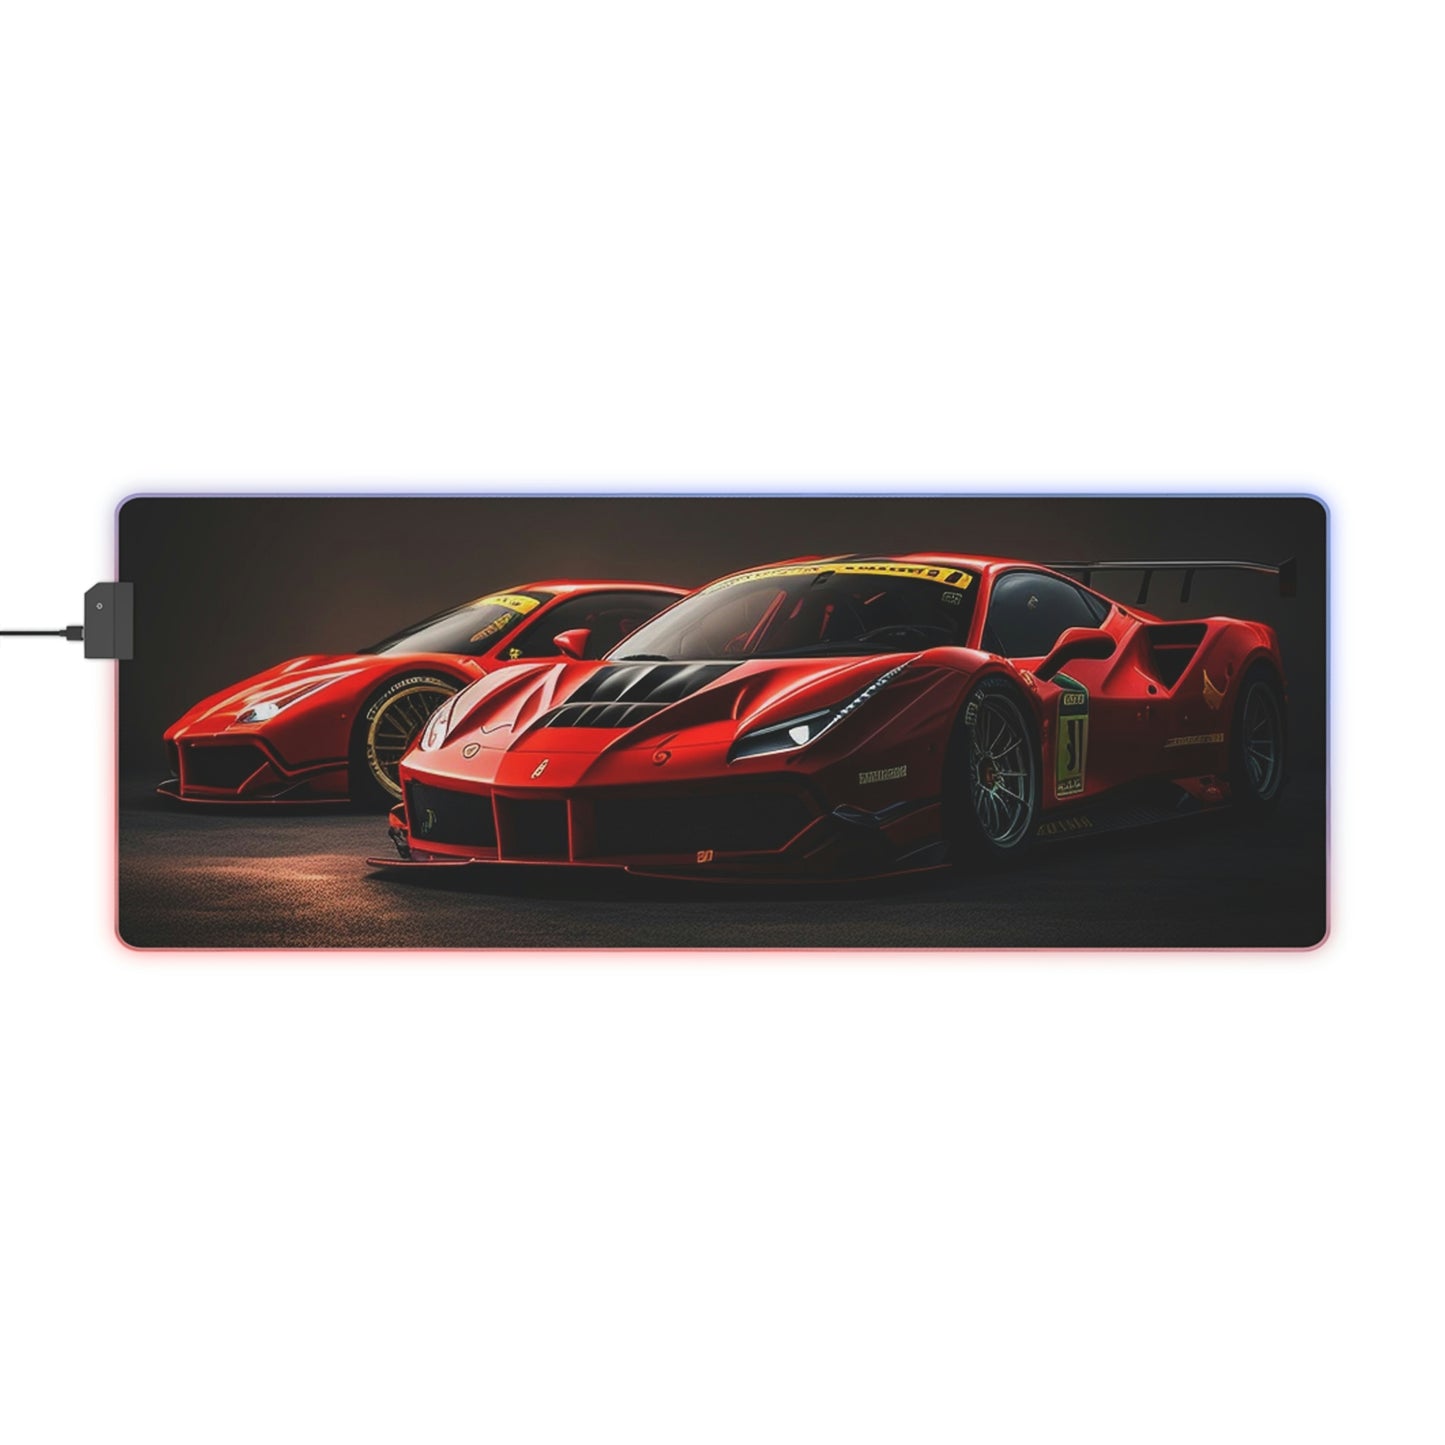 LED Gaming Mouse Pad Ferrari Red 4